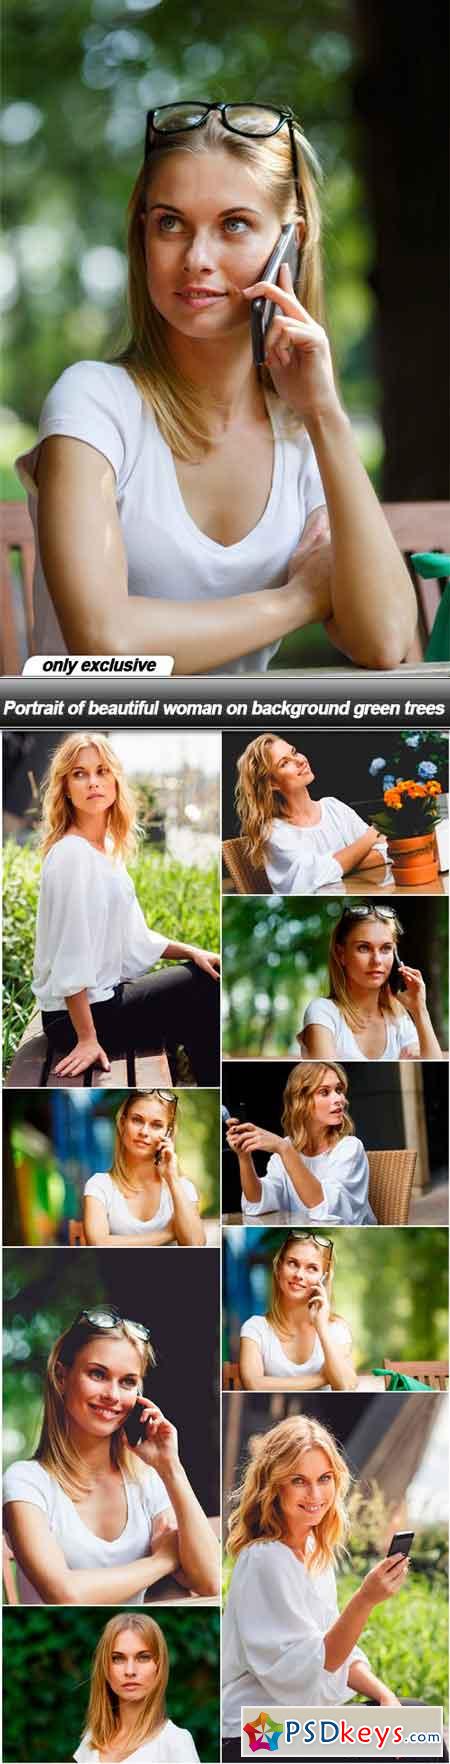 Portrait of beautiful woman on background green trees - 10 UHQ JPEG